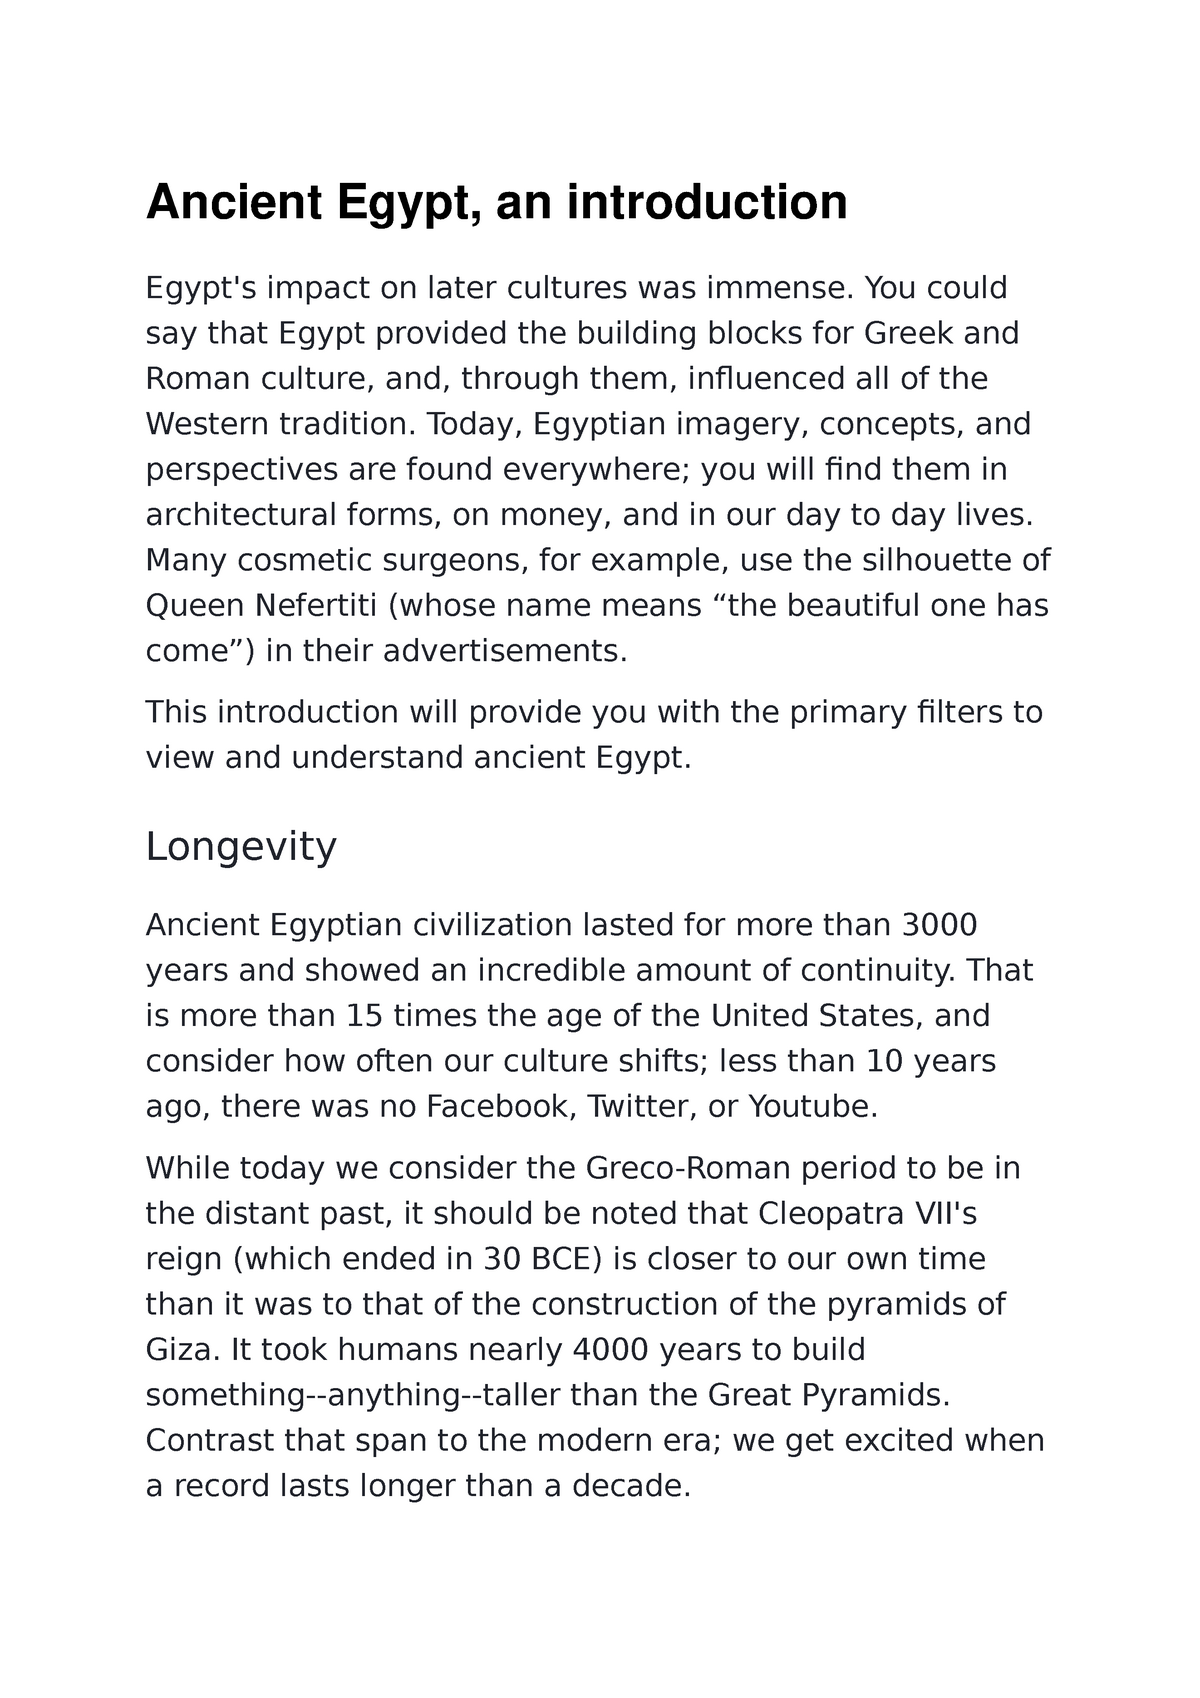 short essay about ancient egypt